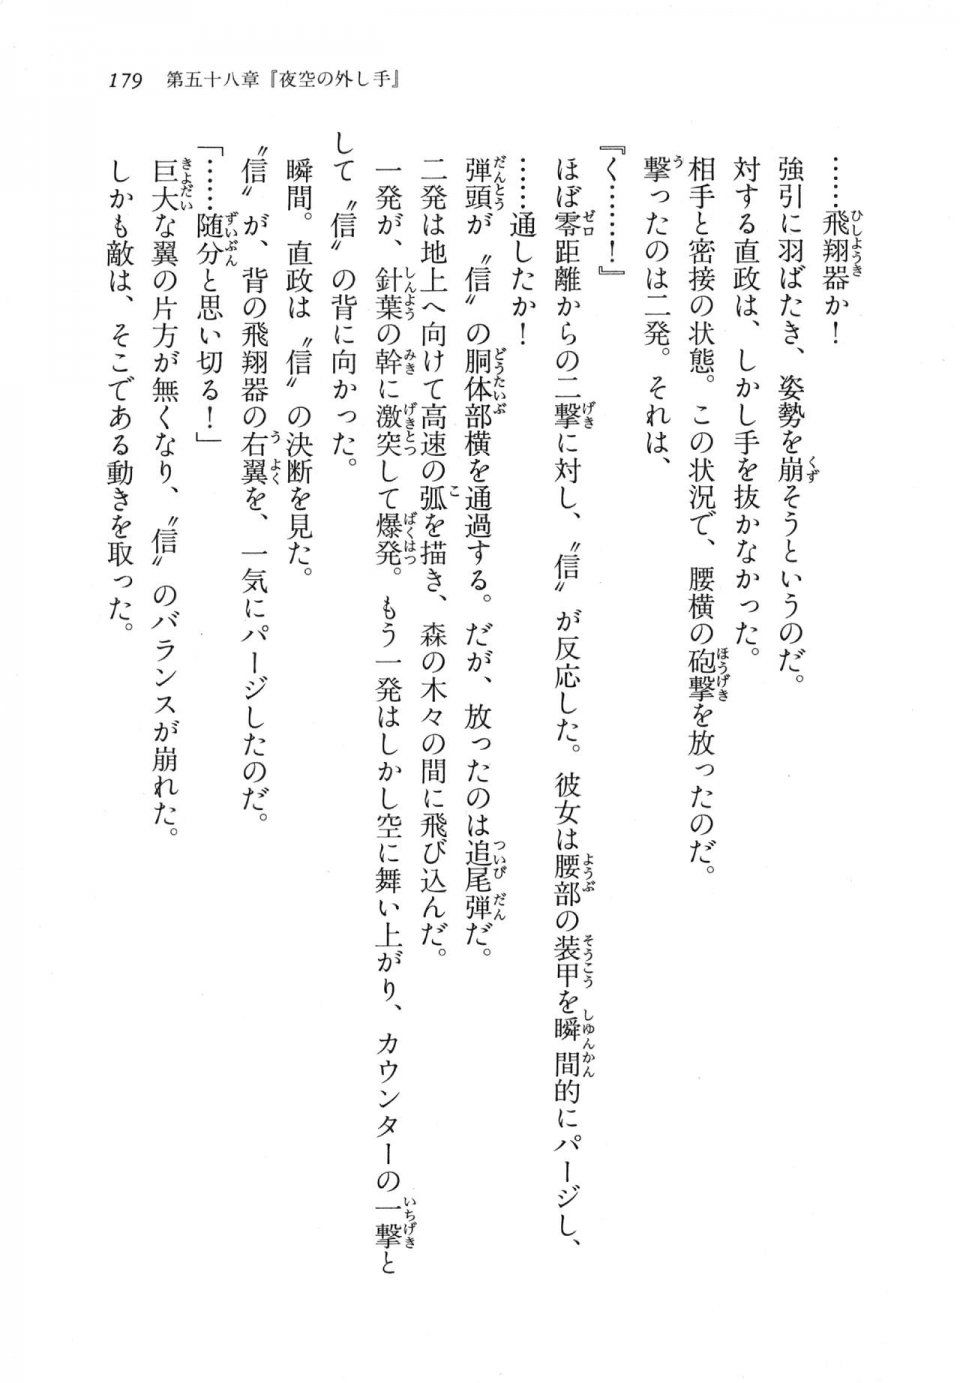 Kyoukai Senjou no Horizon LN Vol 18(7C) Part 1 - Photo #179